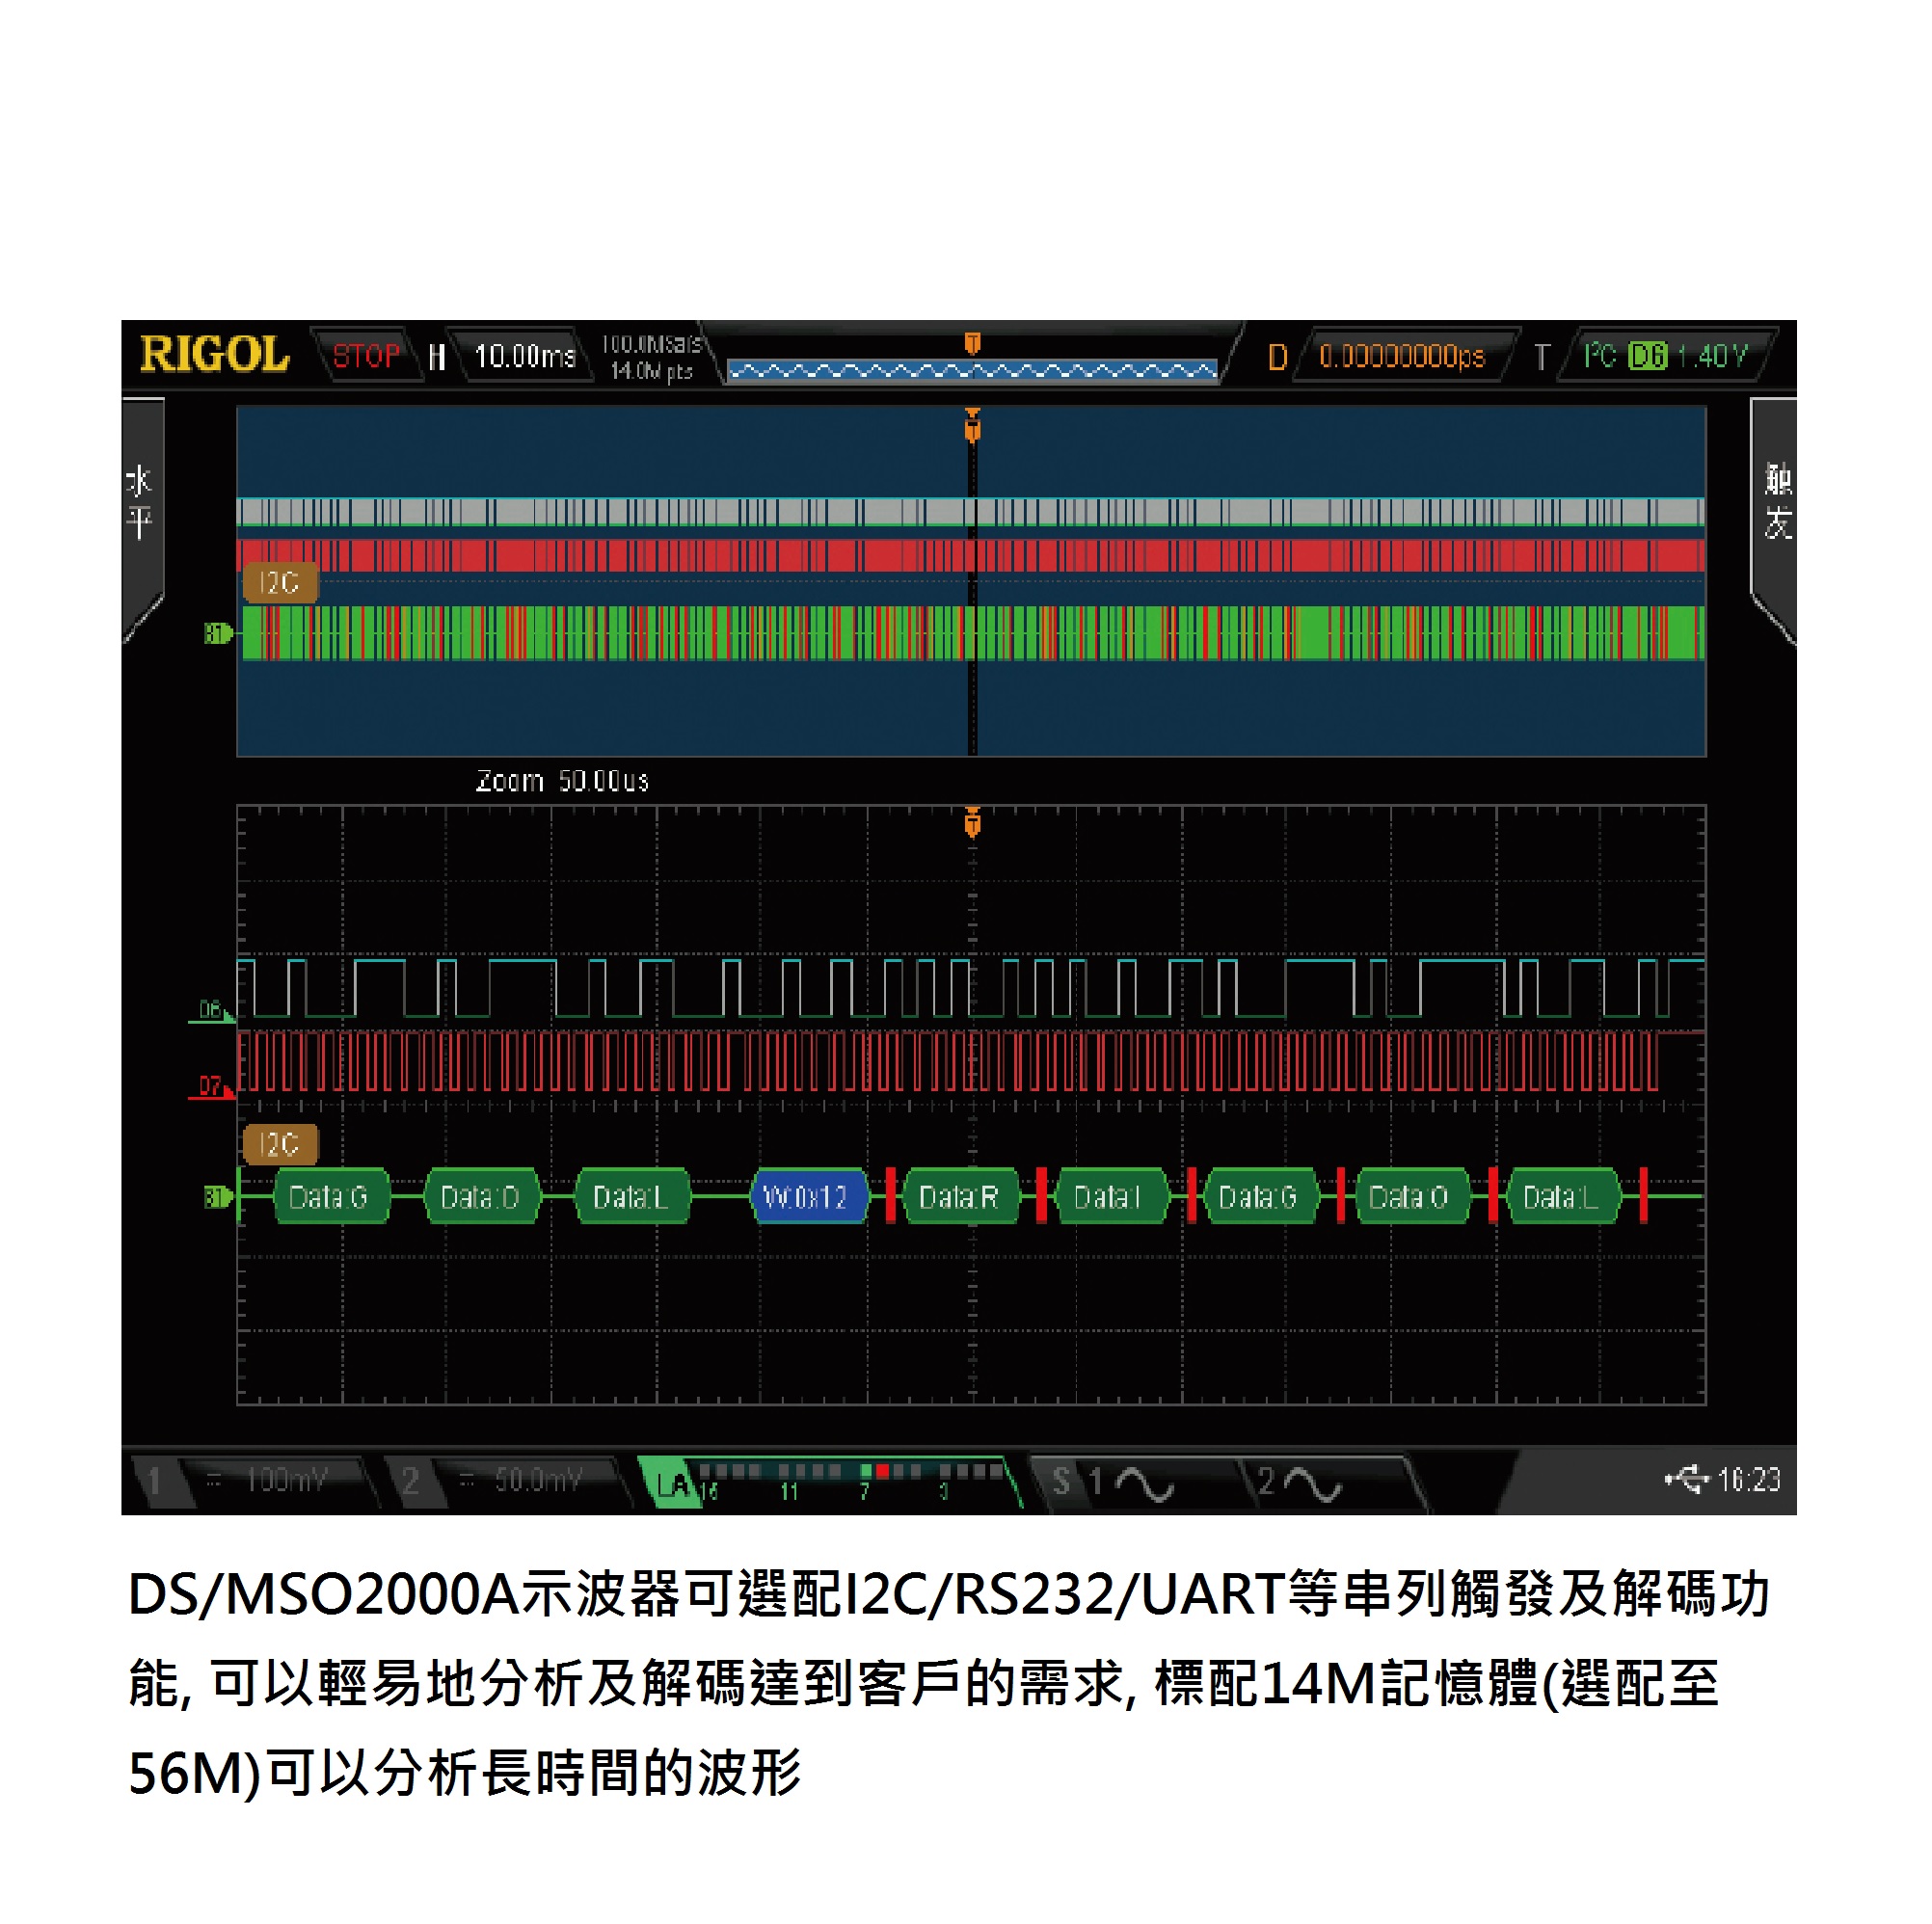 DS/MSO2000A示波器串列信號觸發及解碼說明